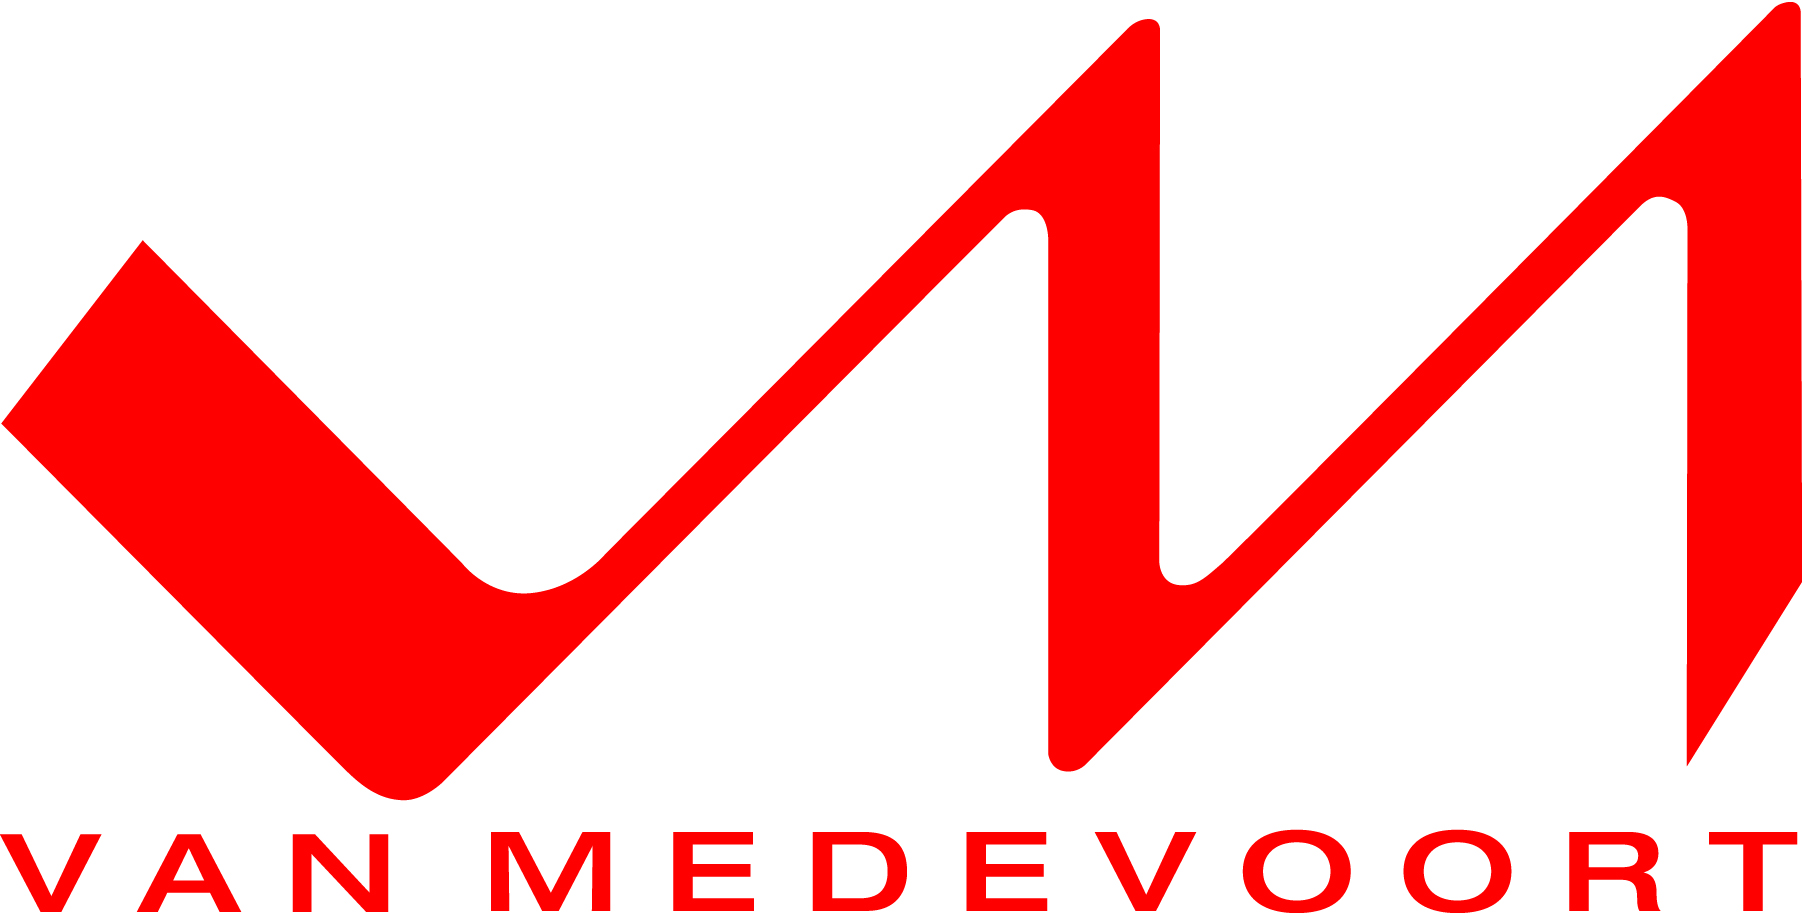 Van Medevoort logo